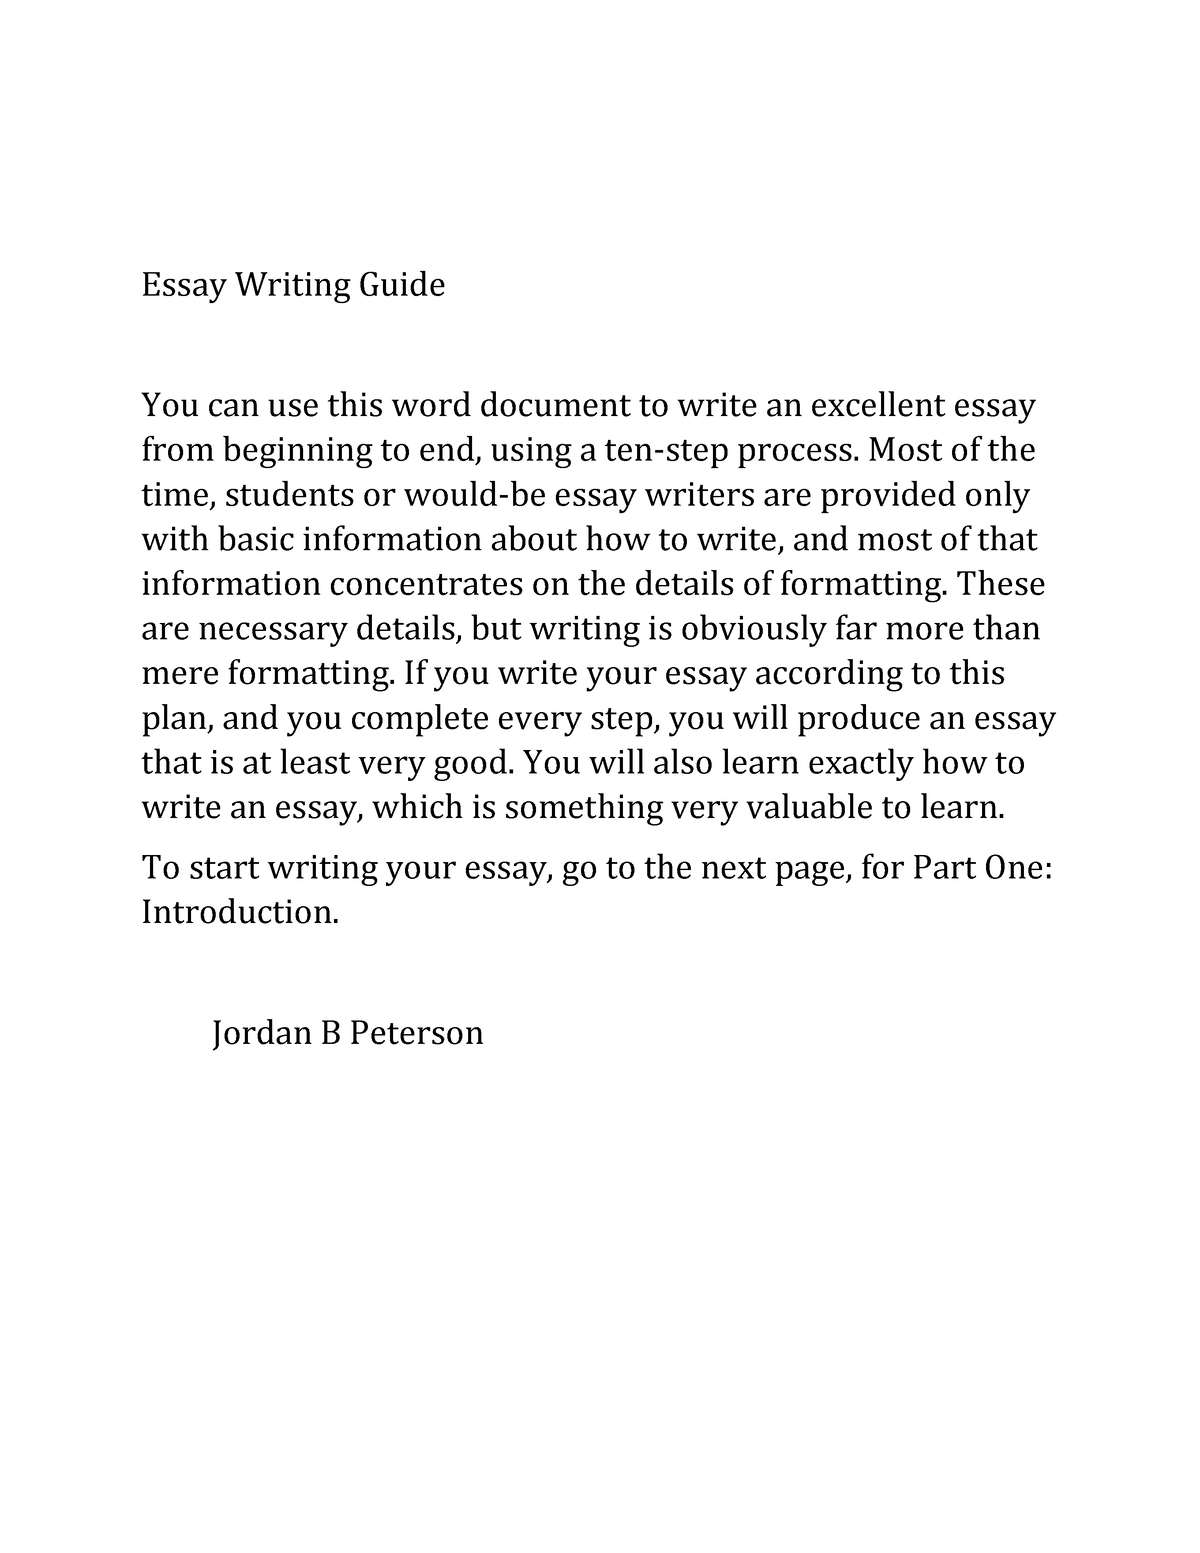 essay jordan peterson pdf